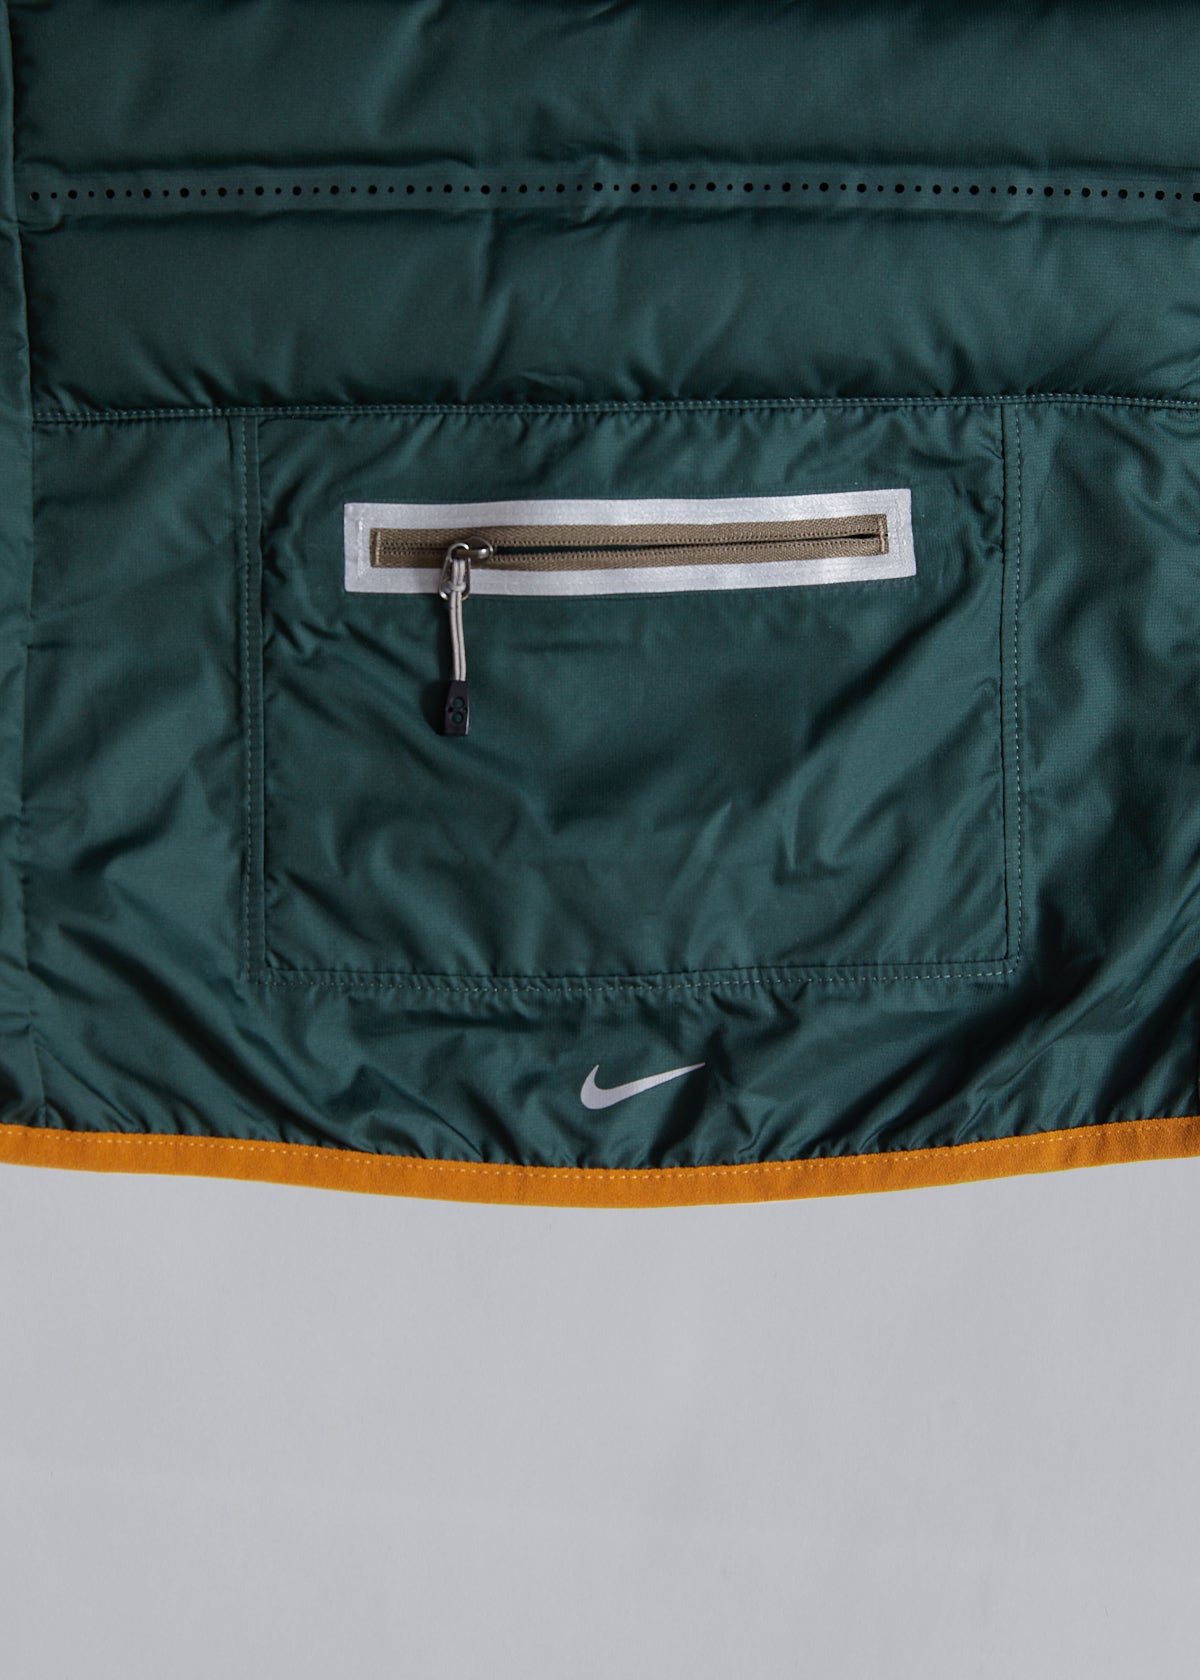 Nike/Gyakusou Aeroloft Running Vest AW2015 - Medium